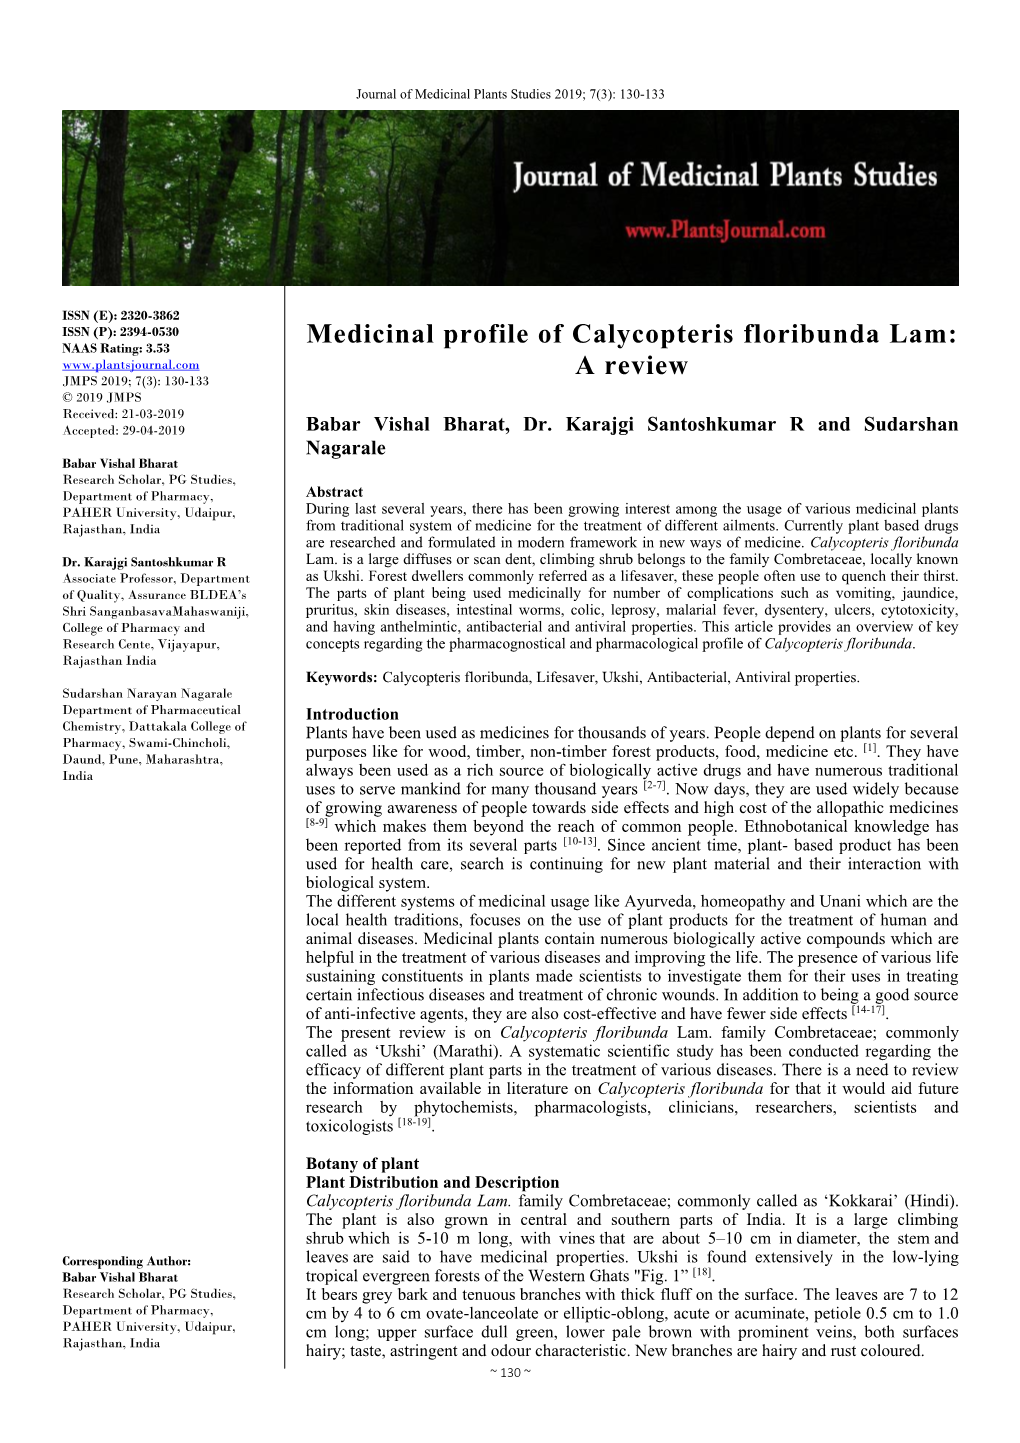 Medicinal Profile of Calycopteris Floribunda Lam: a Review